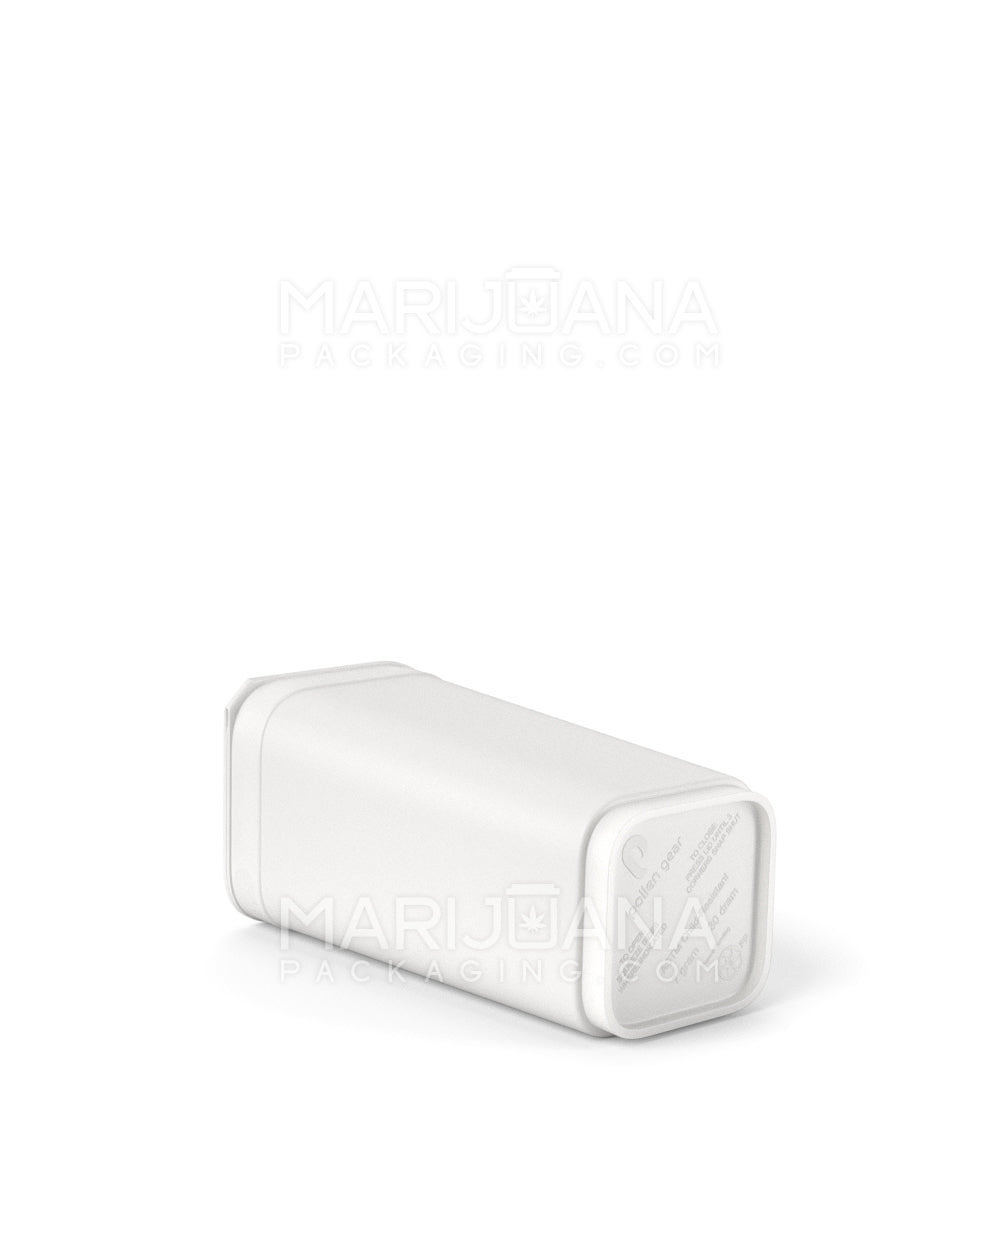 POLLEN GEAR | 100% Recyclable Opaque White Pop Box Pop Top Bottles | 30dr - 7g - 373 Count - 7